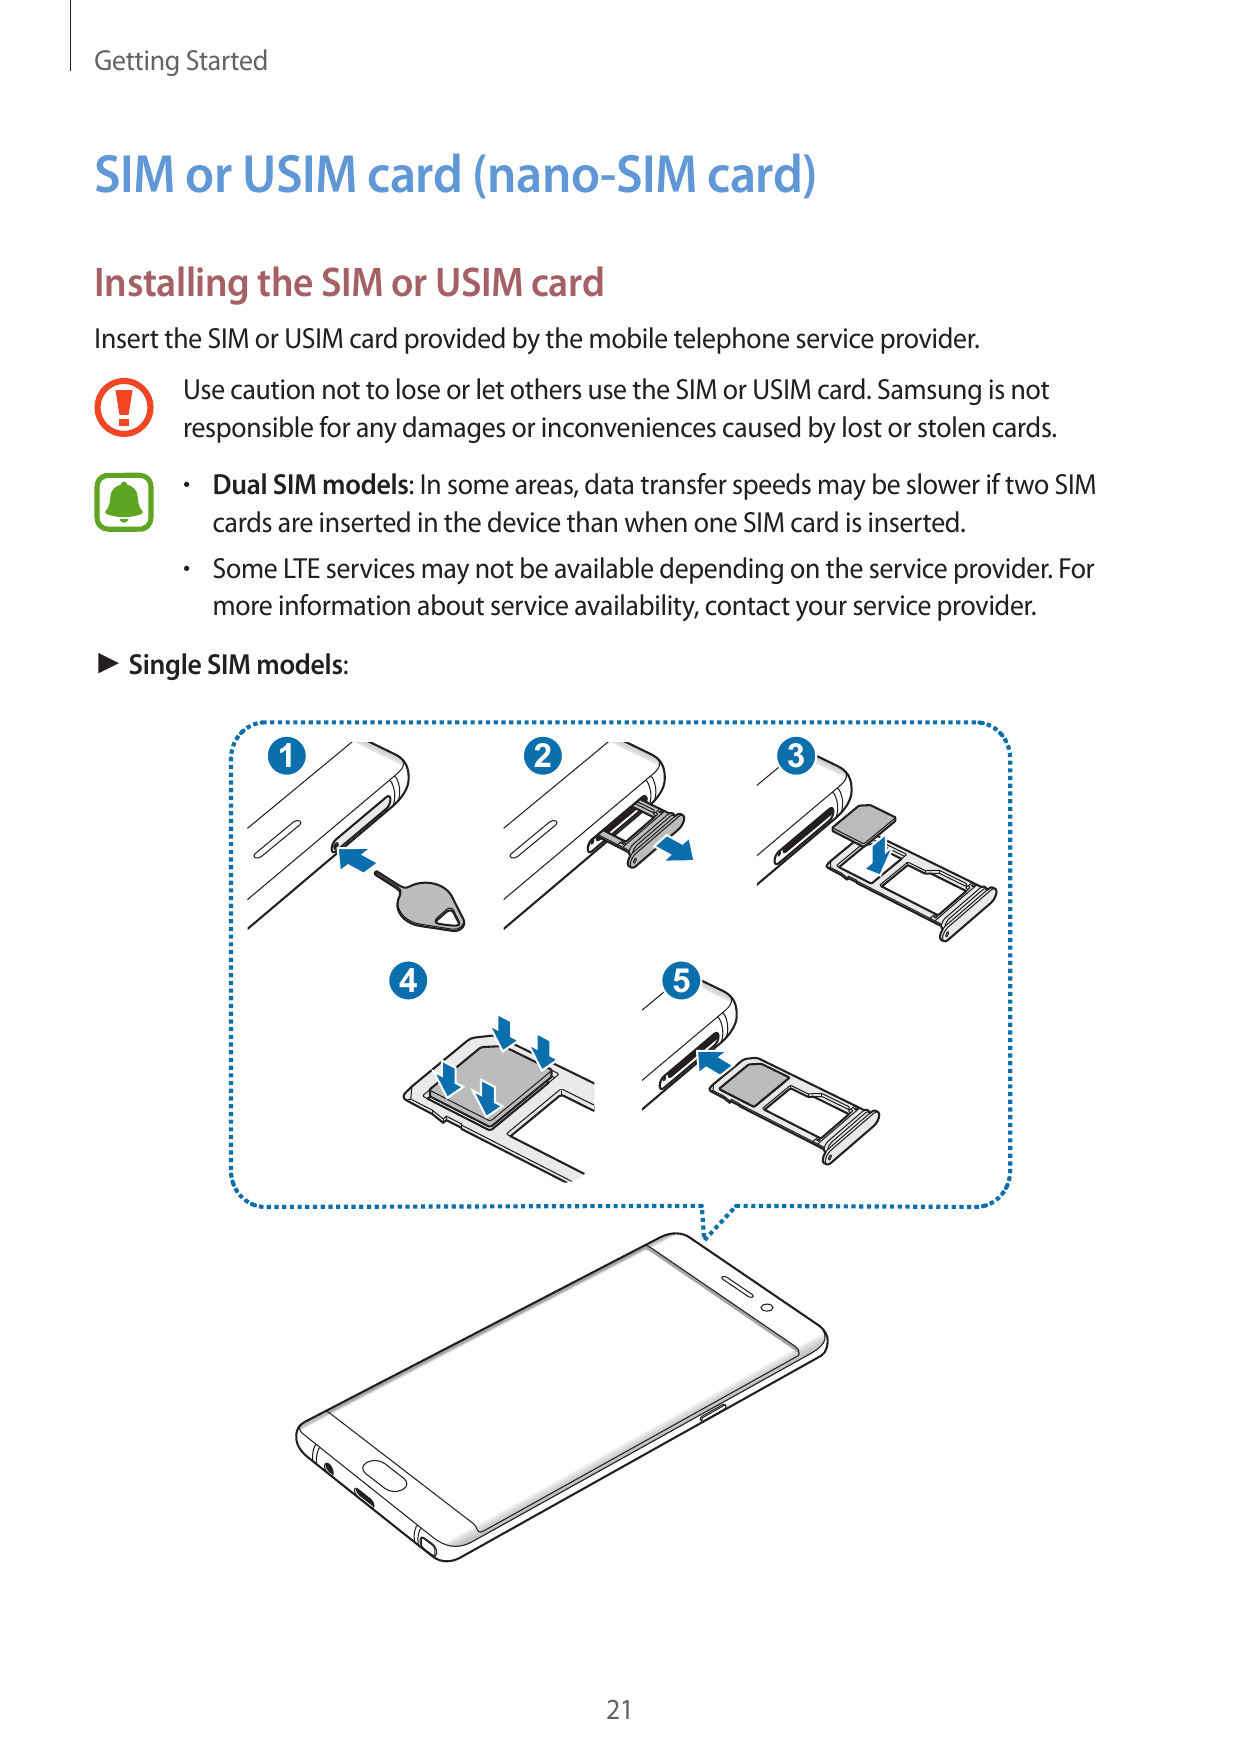 Getting StartedSIM or USIM card (nano-SIM card)Installing the SIM or USIM cardInsert the SIM or USIM card provided by the mobile